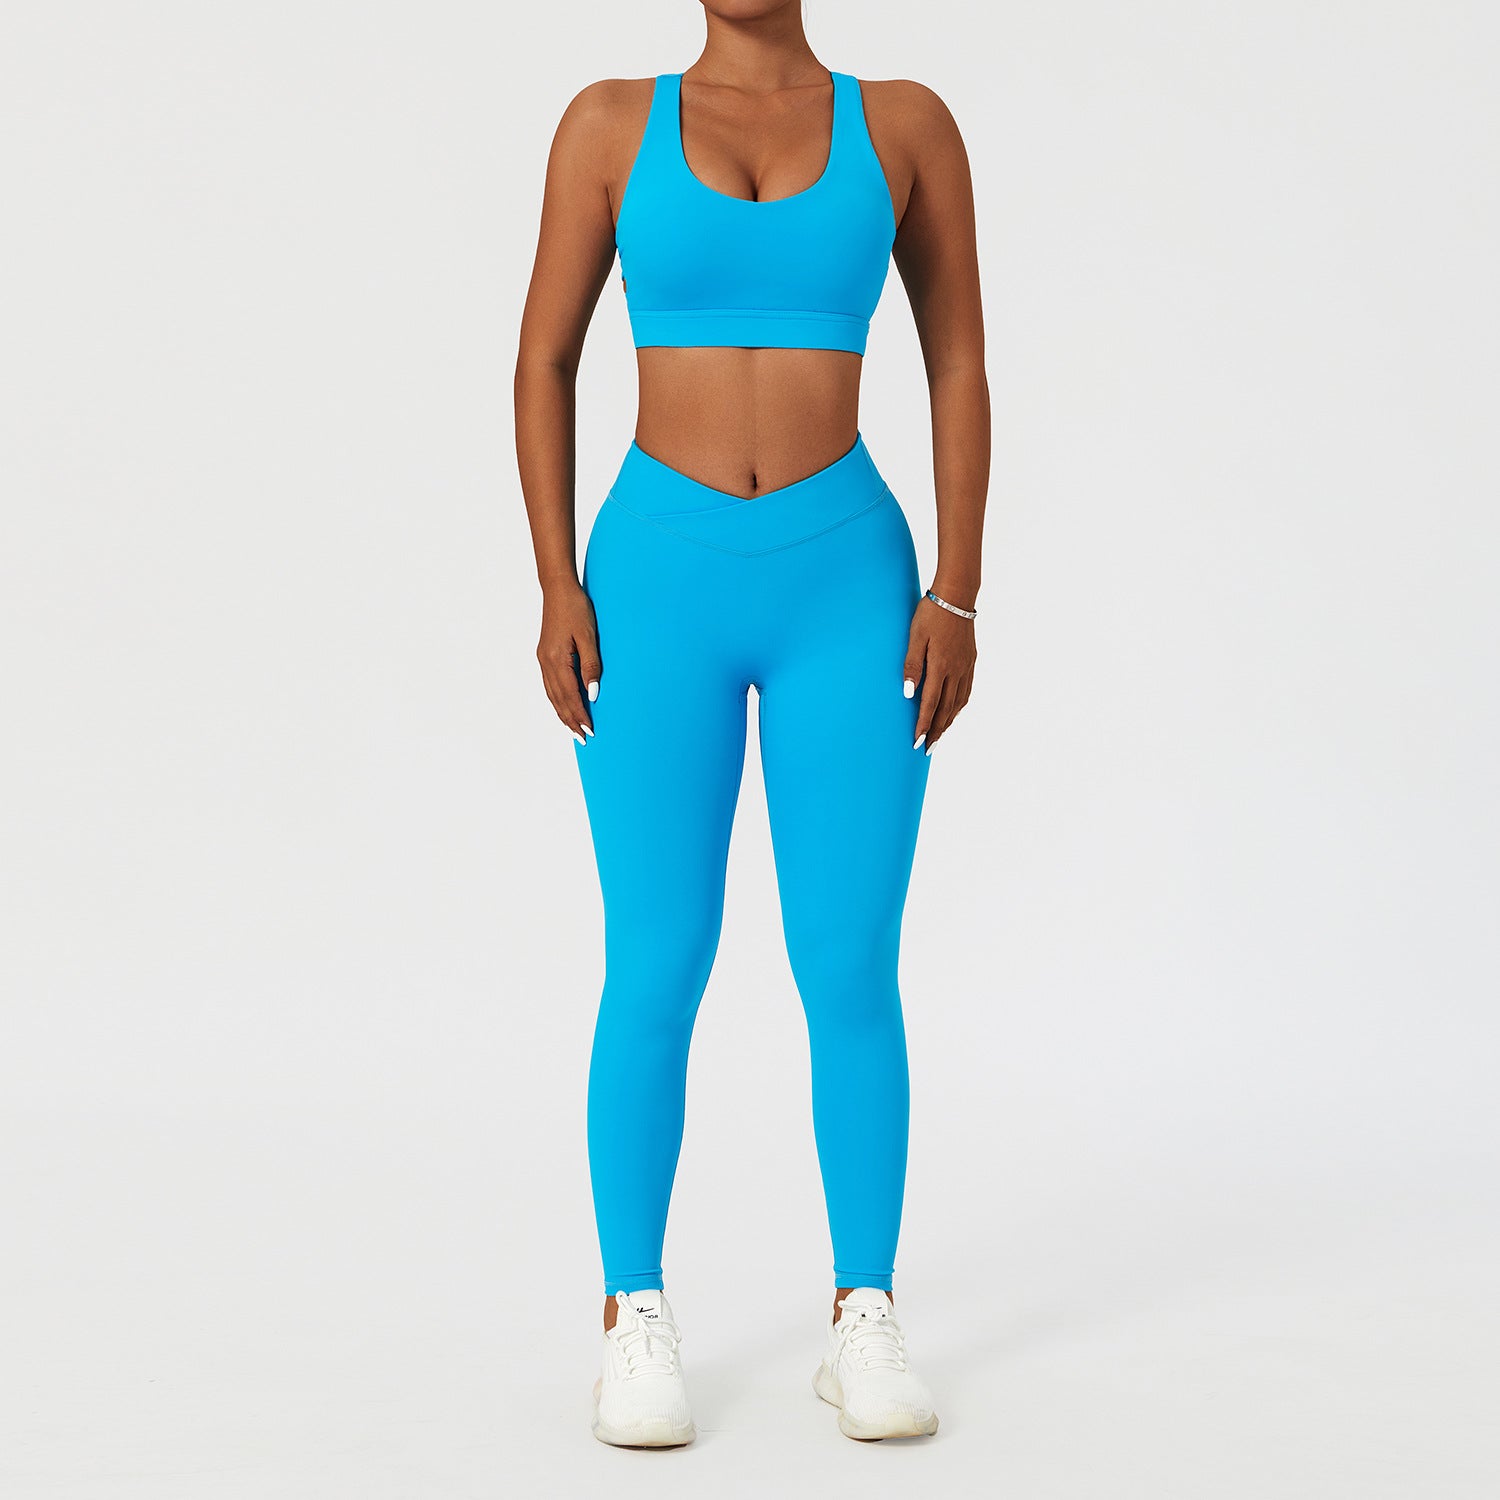 Women 2 Piece Quick Dry Jogging Training Wear Breathable Gym Fitness Sets Alpha C Apparel L / Blue style 2